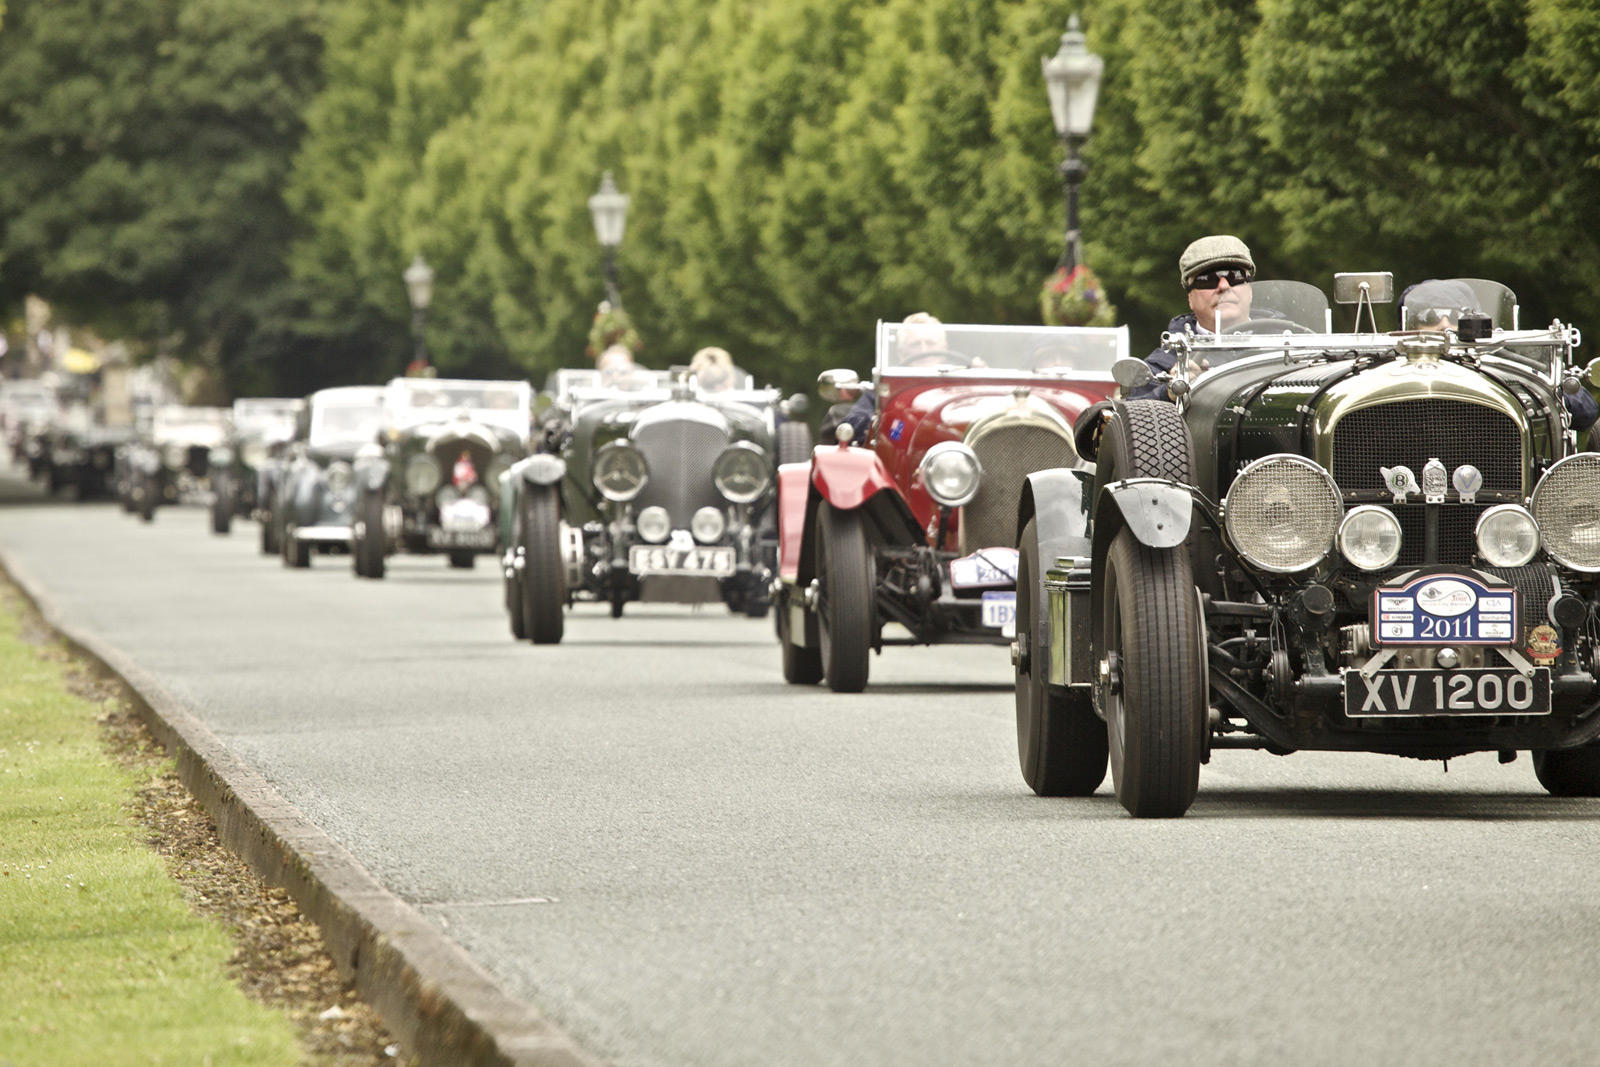 Bentley Drivers Club's 75th Anniversary